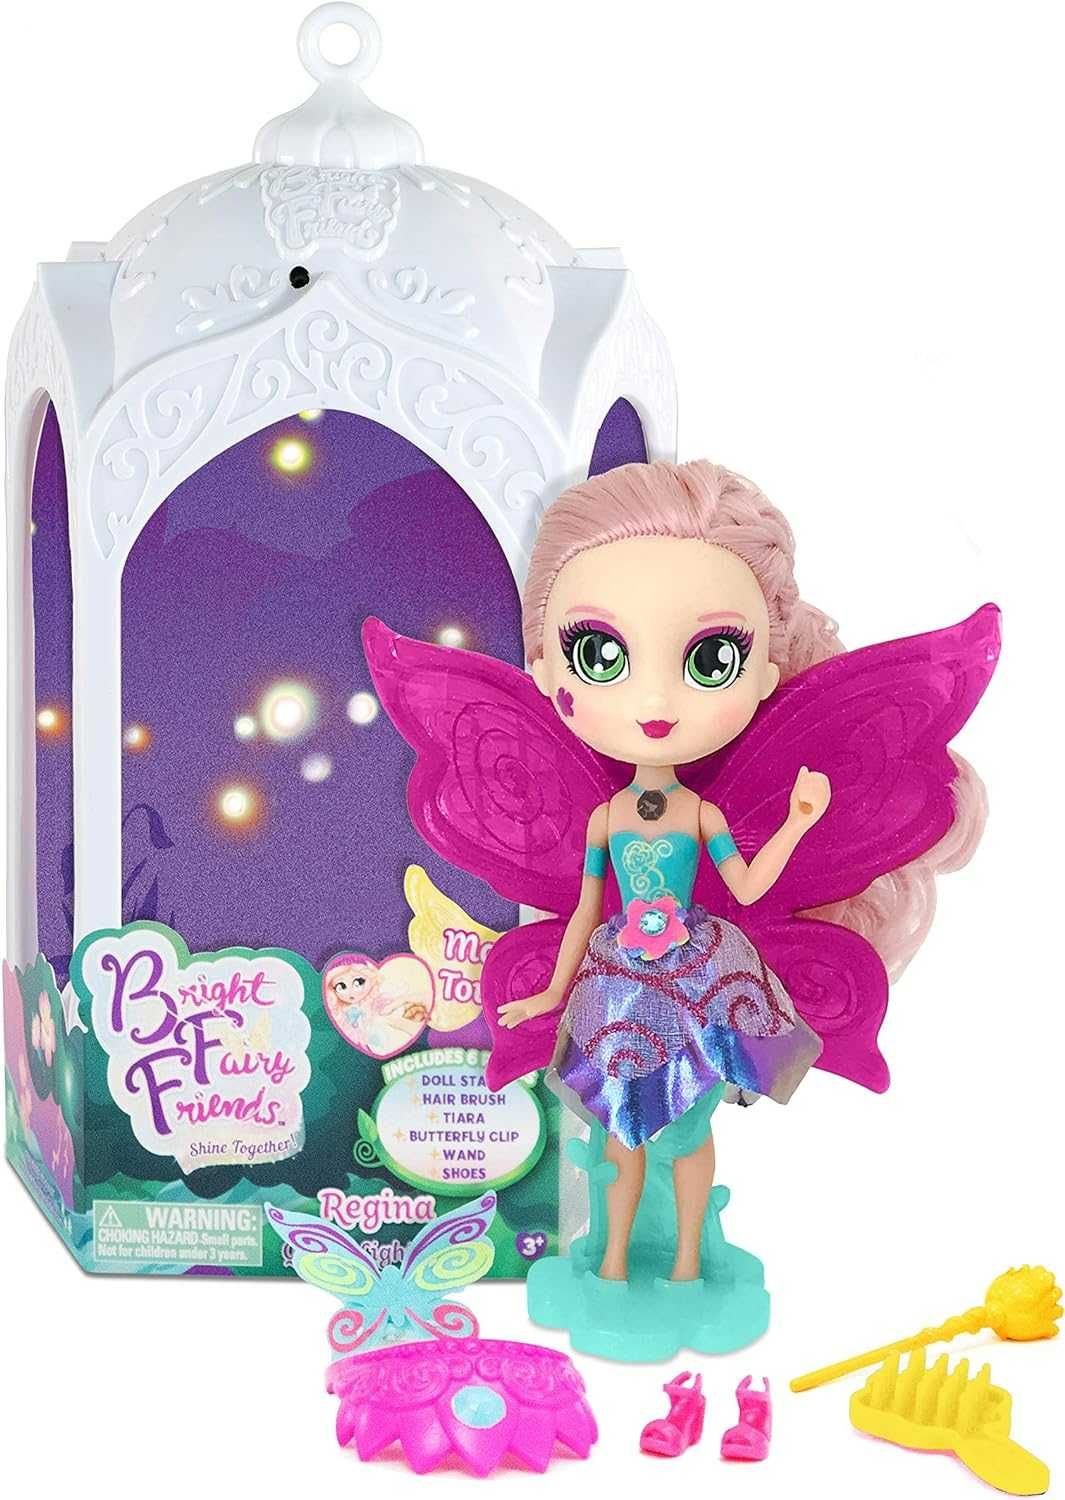 BFF Bright Fairy Friends lalka królowa wróżek